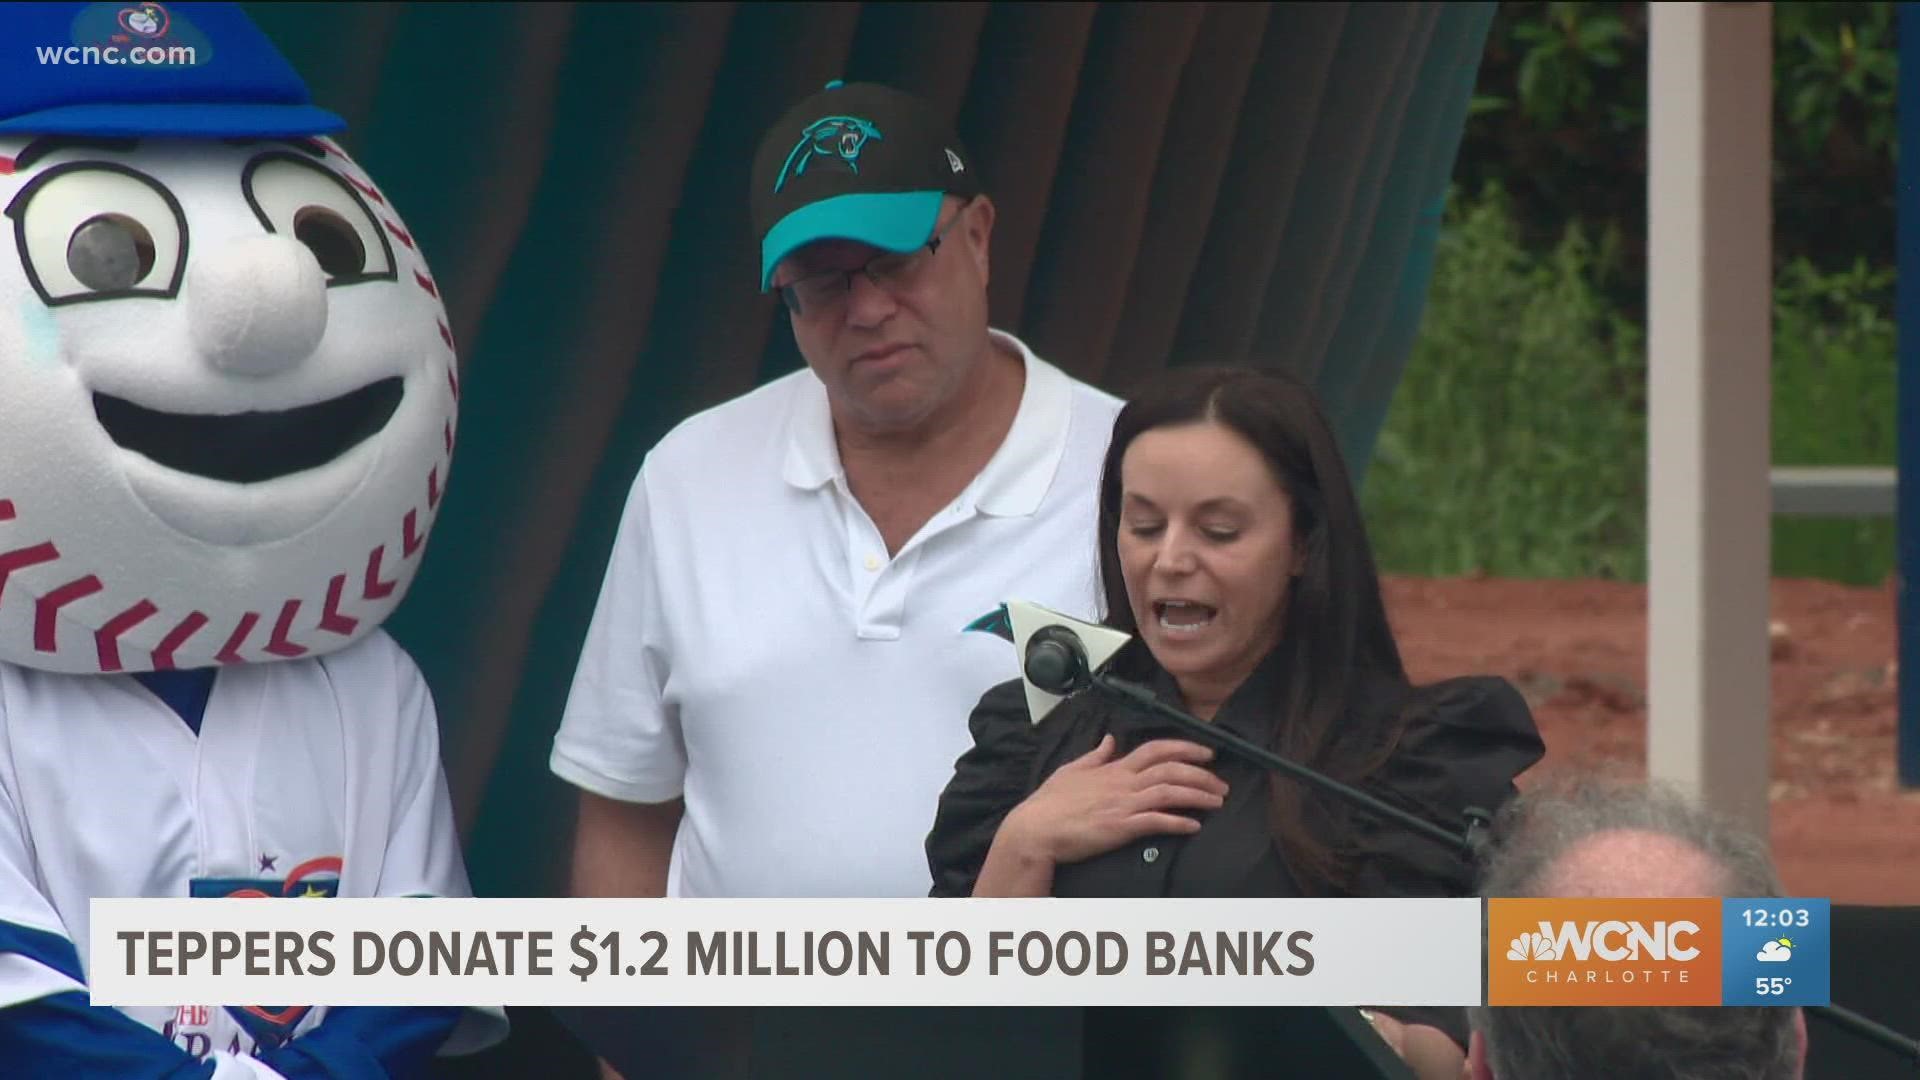 The $1.2 million will benefit 10 food banks in North Carolina and South Carolina through Feeding the Carolinas.